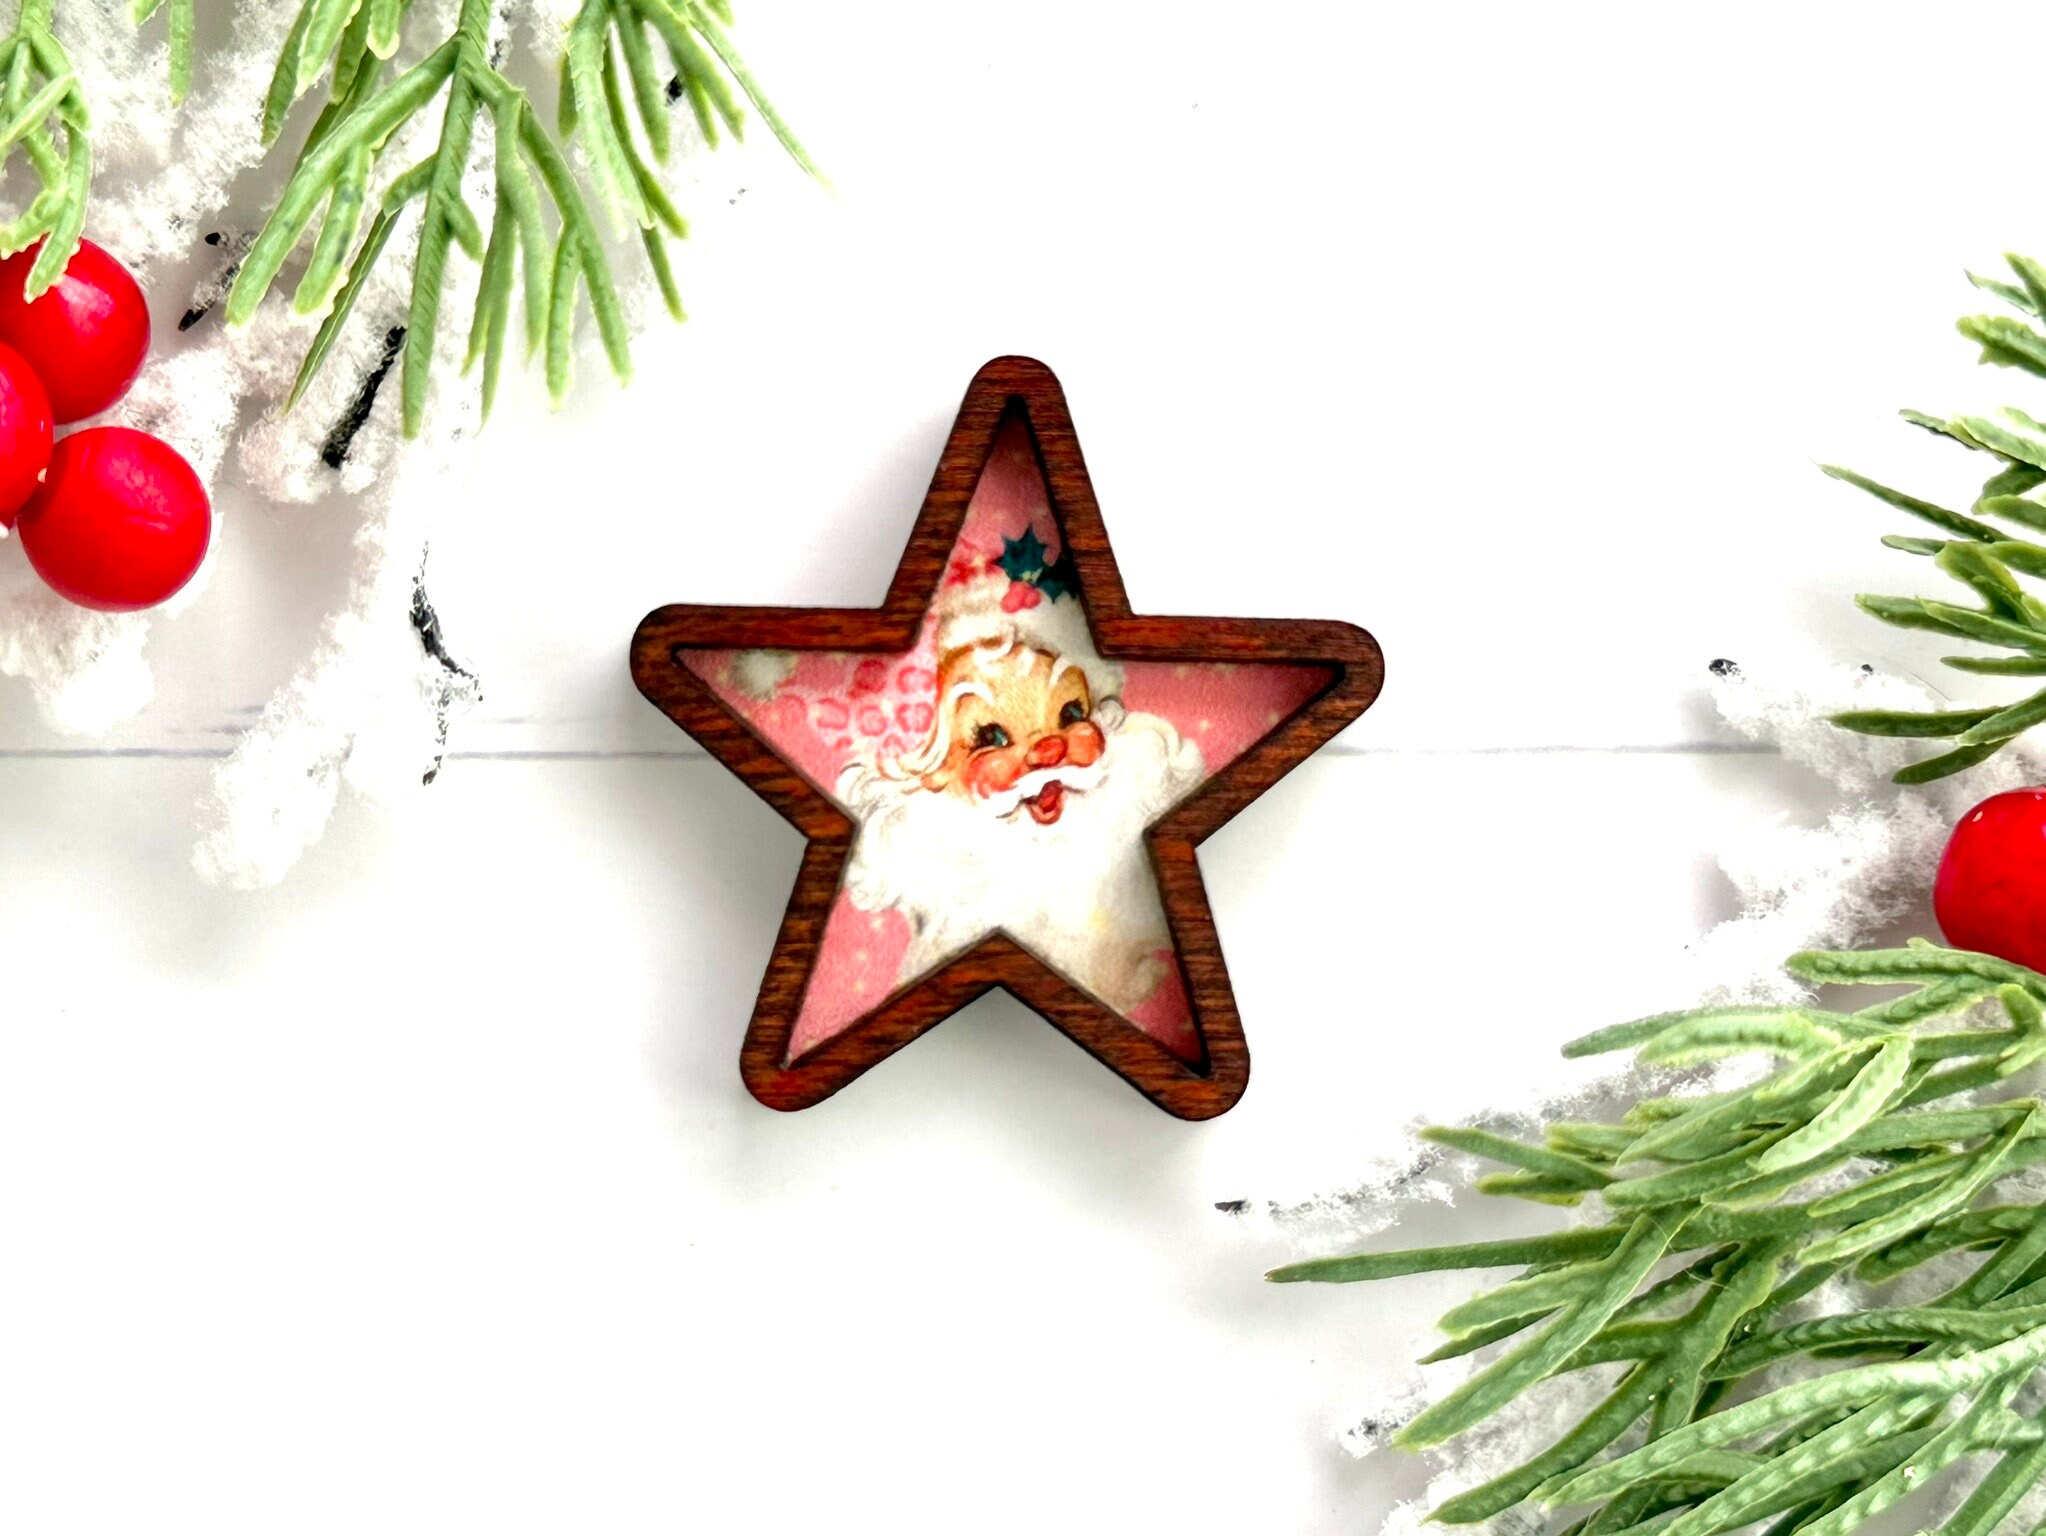 Mini Star Snowflake Ornaments, Set of 4 Christmas Ornaments